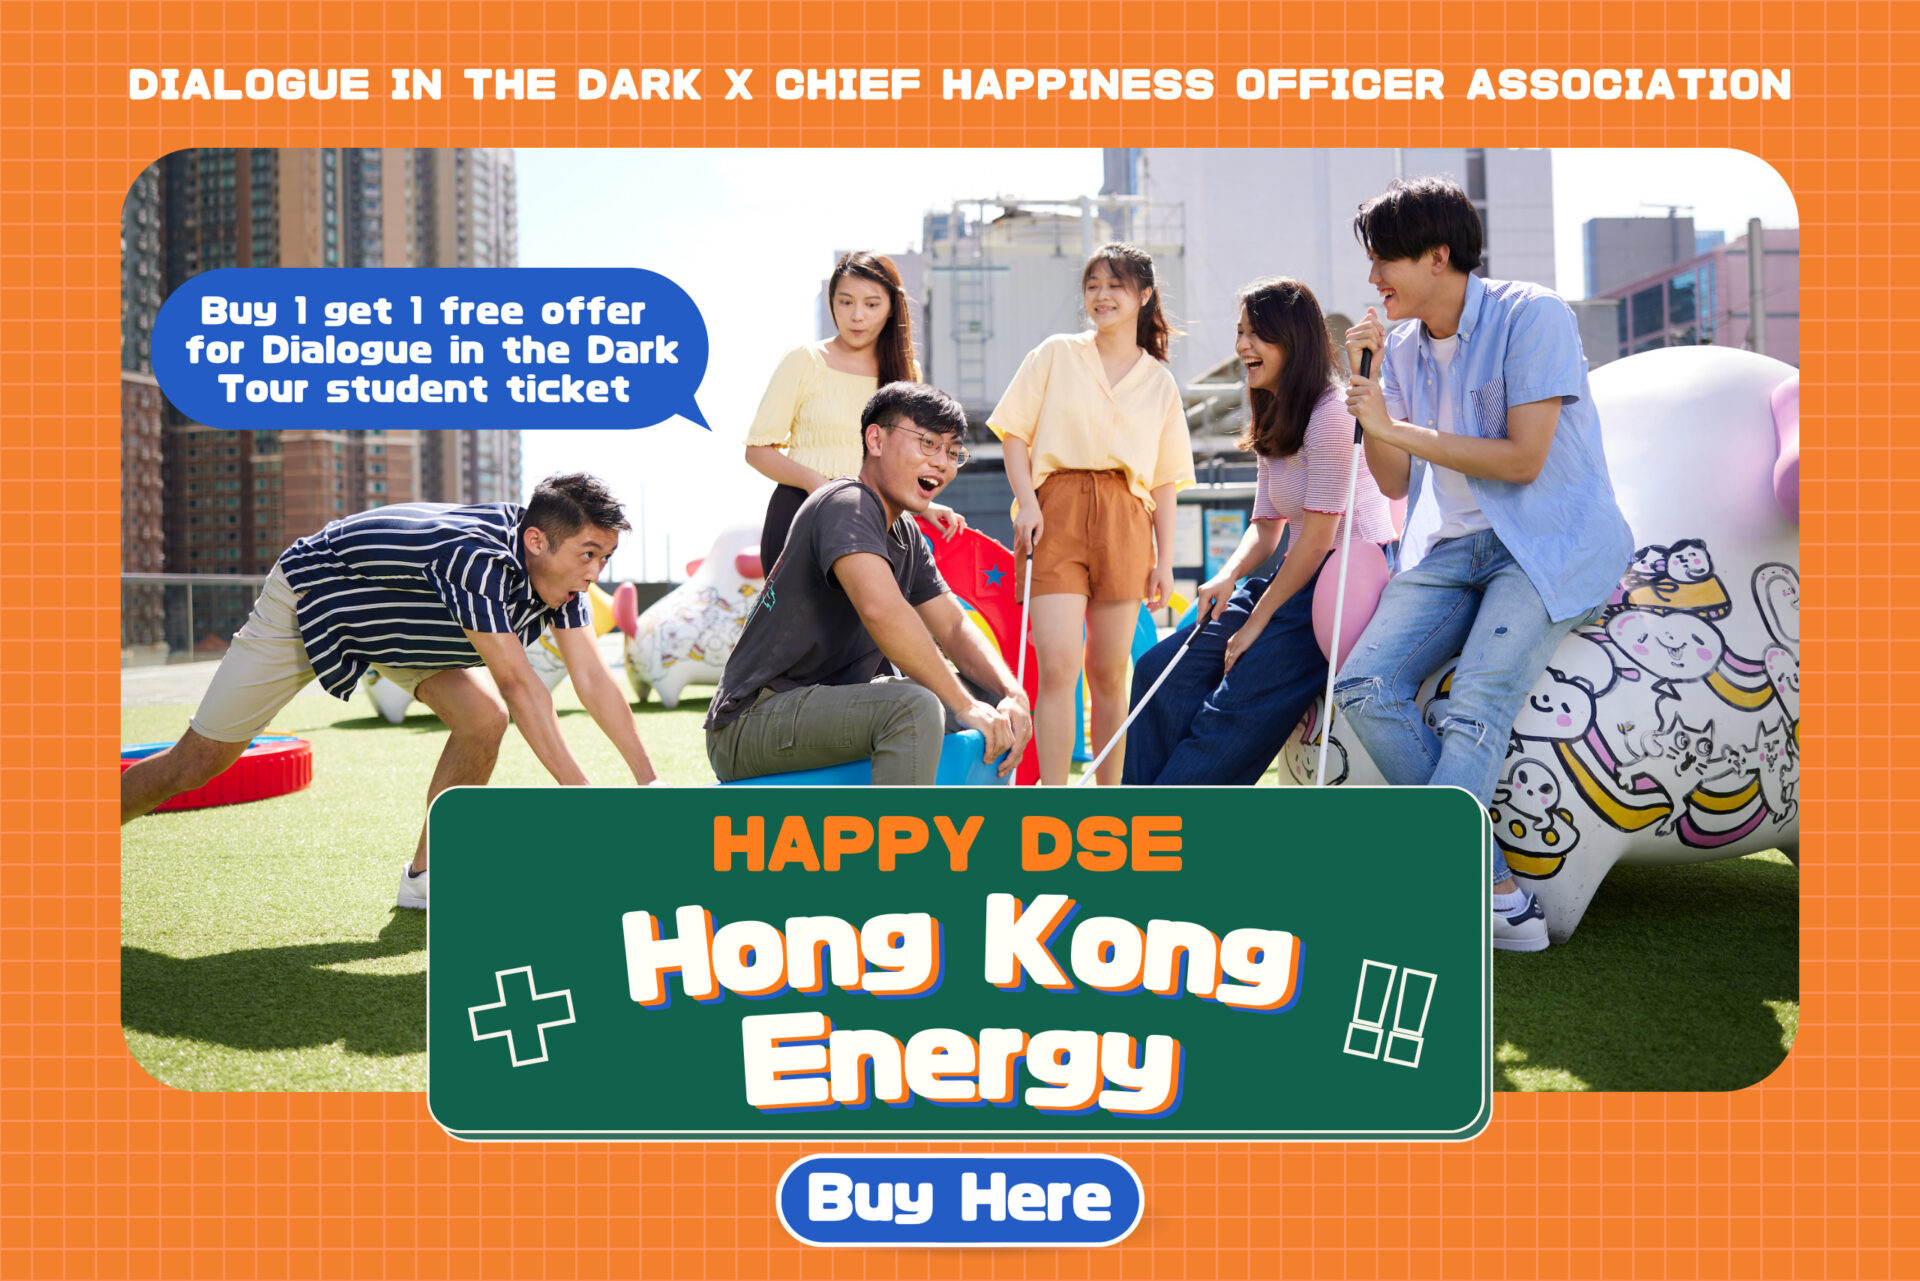 Happy DSE, Hong Kong Energy